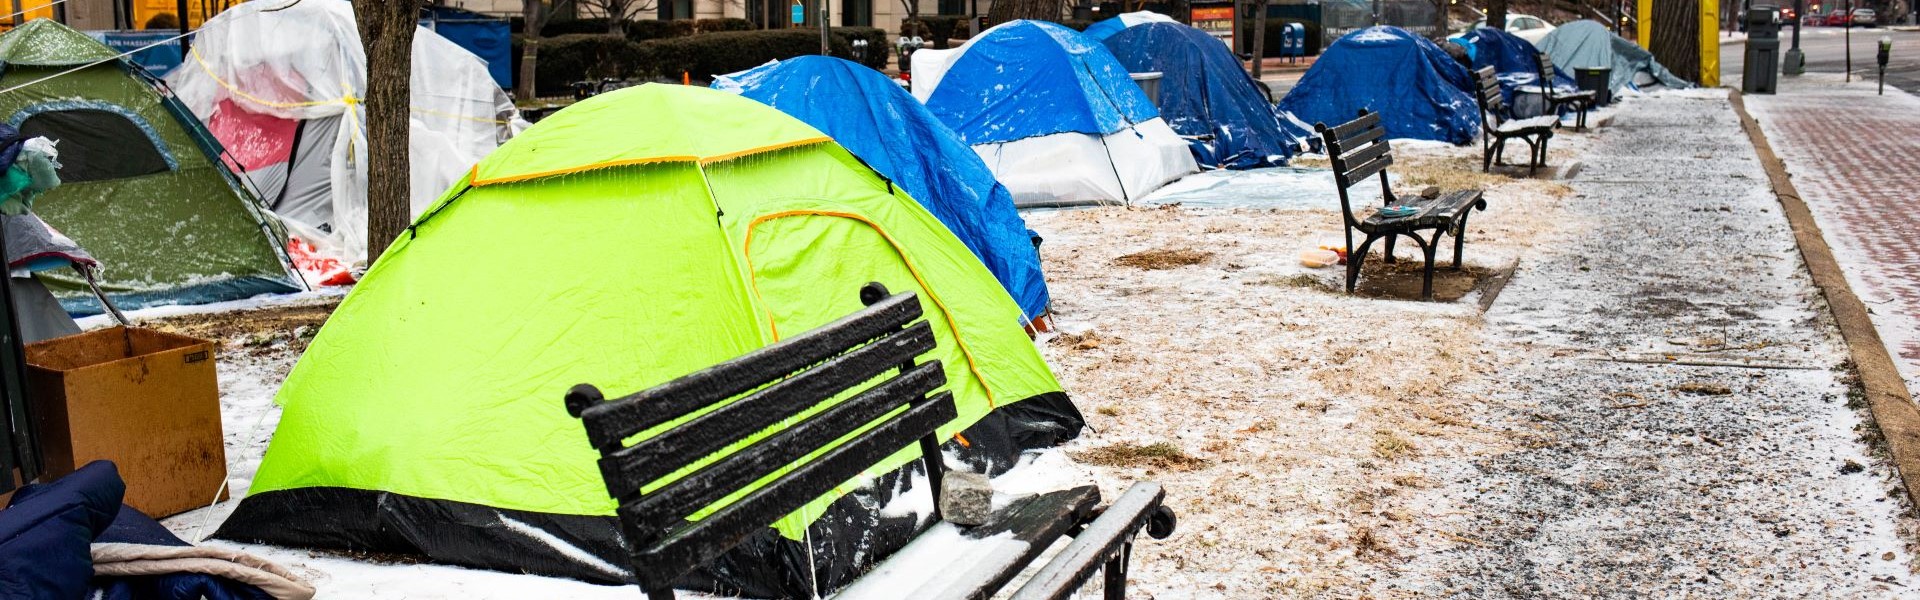 Tents on snowy street